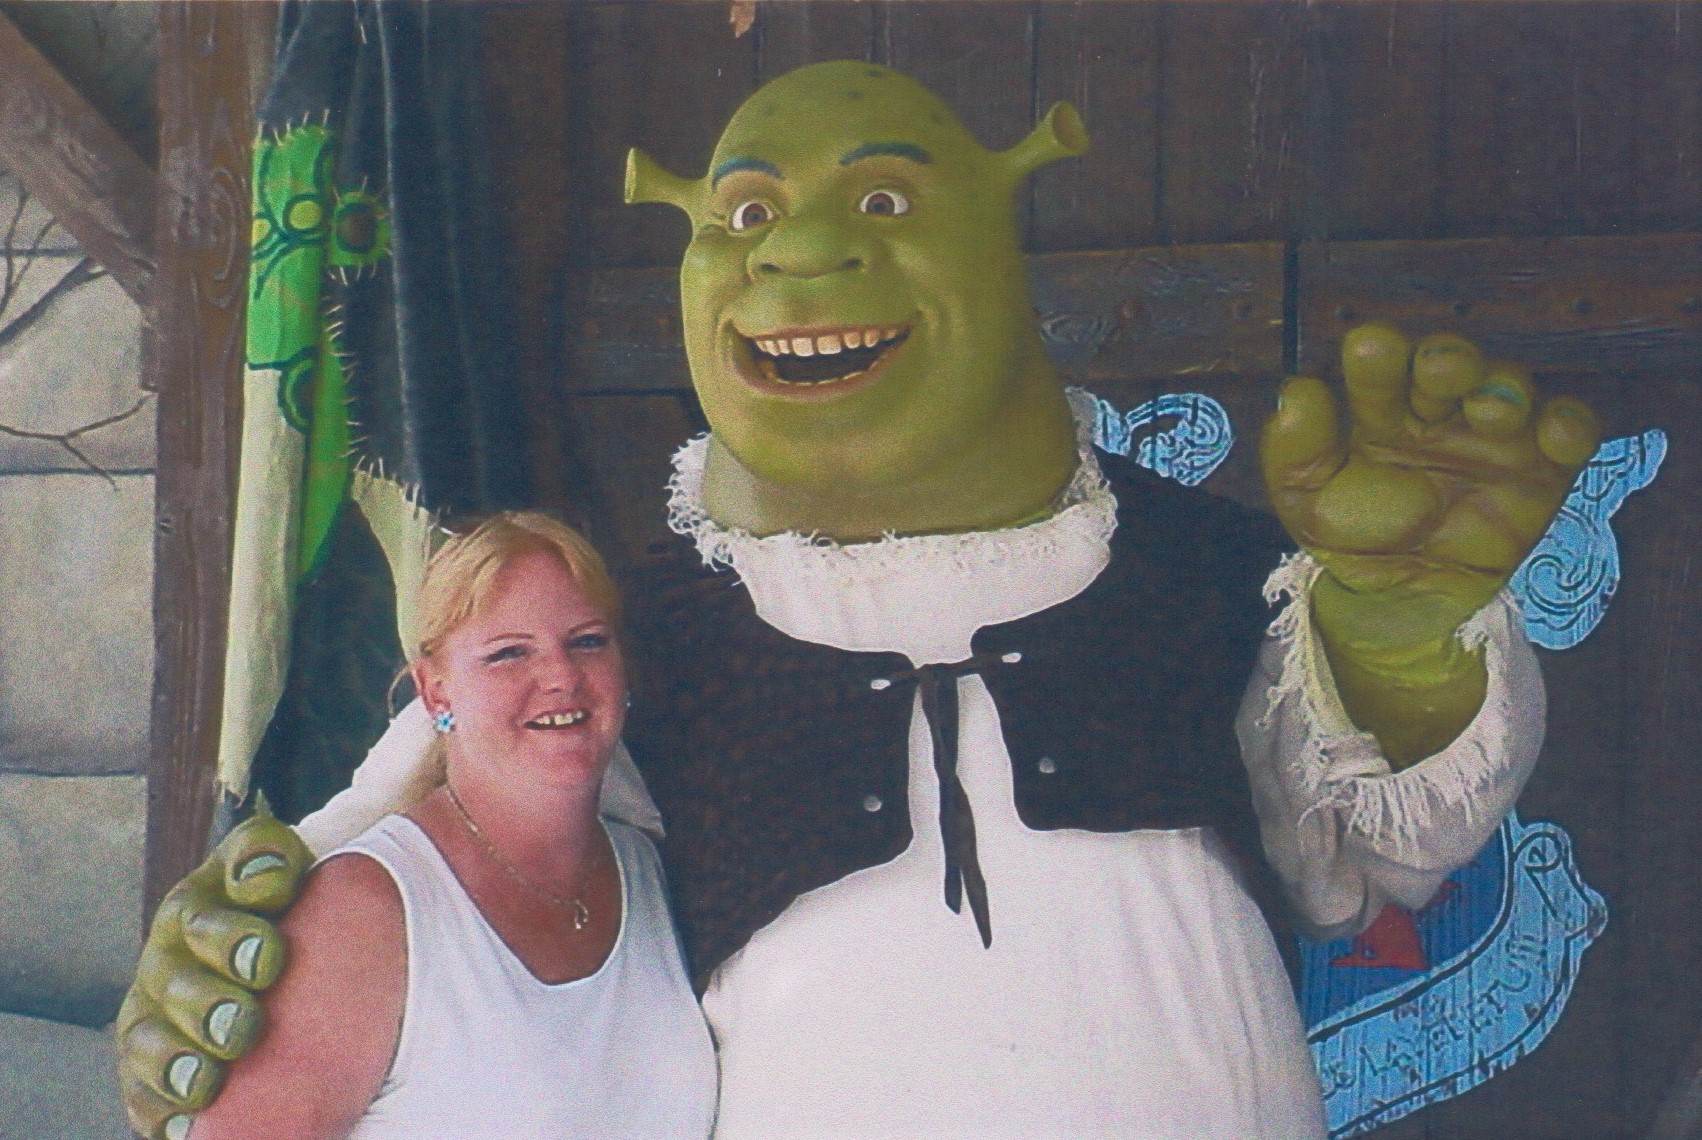 With Shrek!